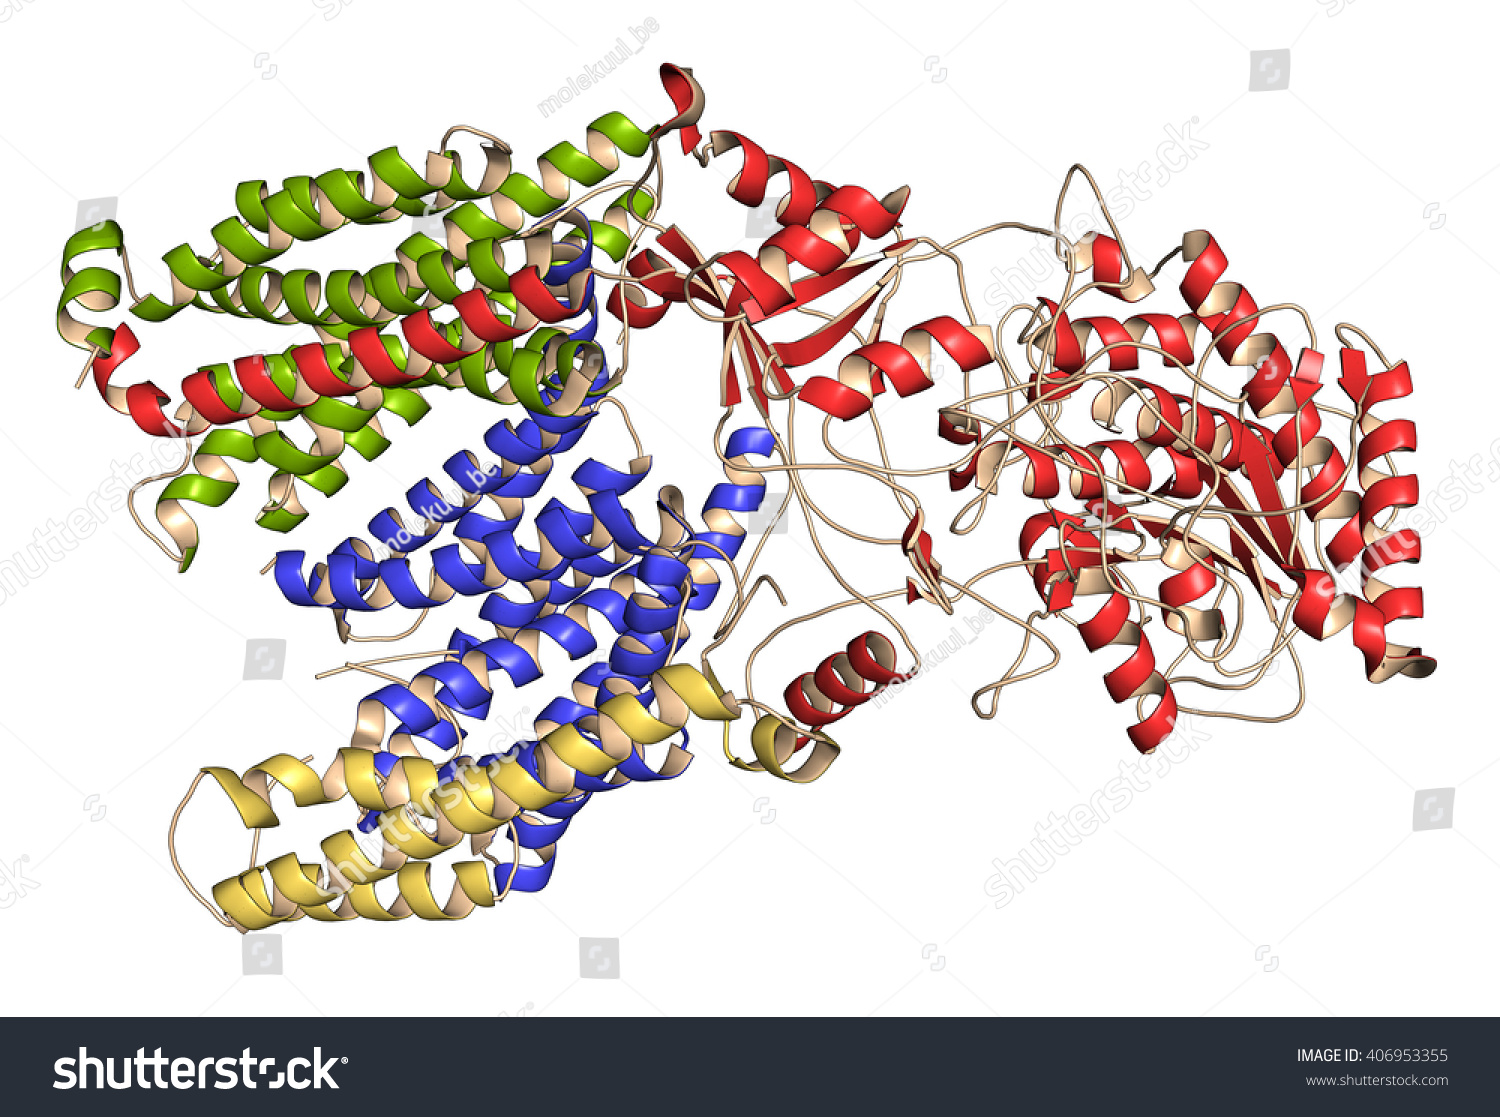 Структура белка закодирована в молекуле днк. Гамма секретаза. Бета амилоид молекула. Бета-секретаза. Белок предшественник бета амилоида.